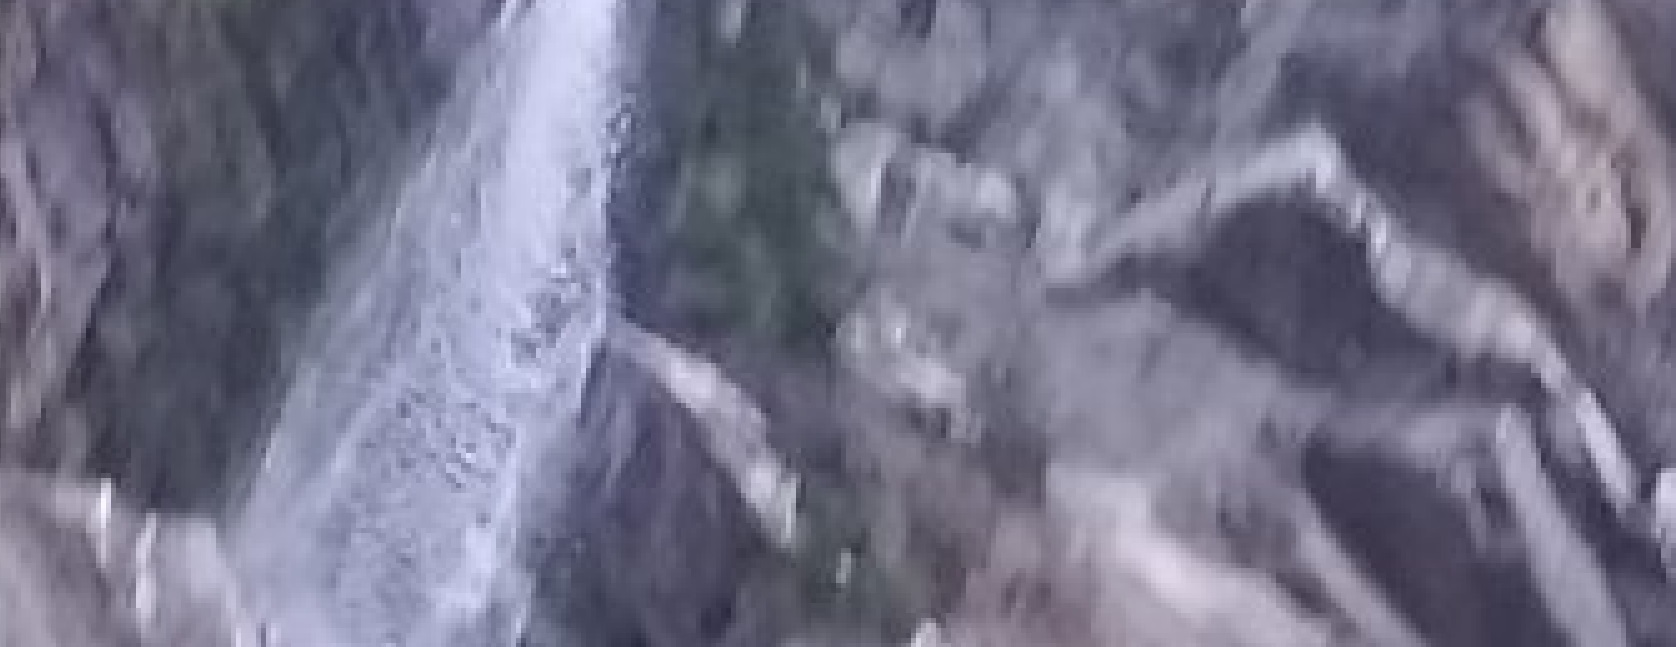 Satdhara Falls Dalhousie Tour, Himachal Pradesh